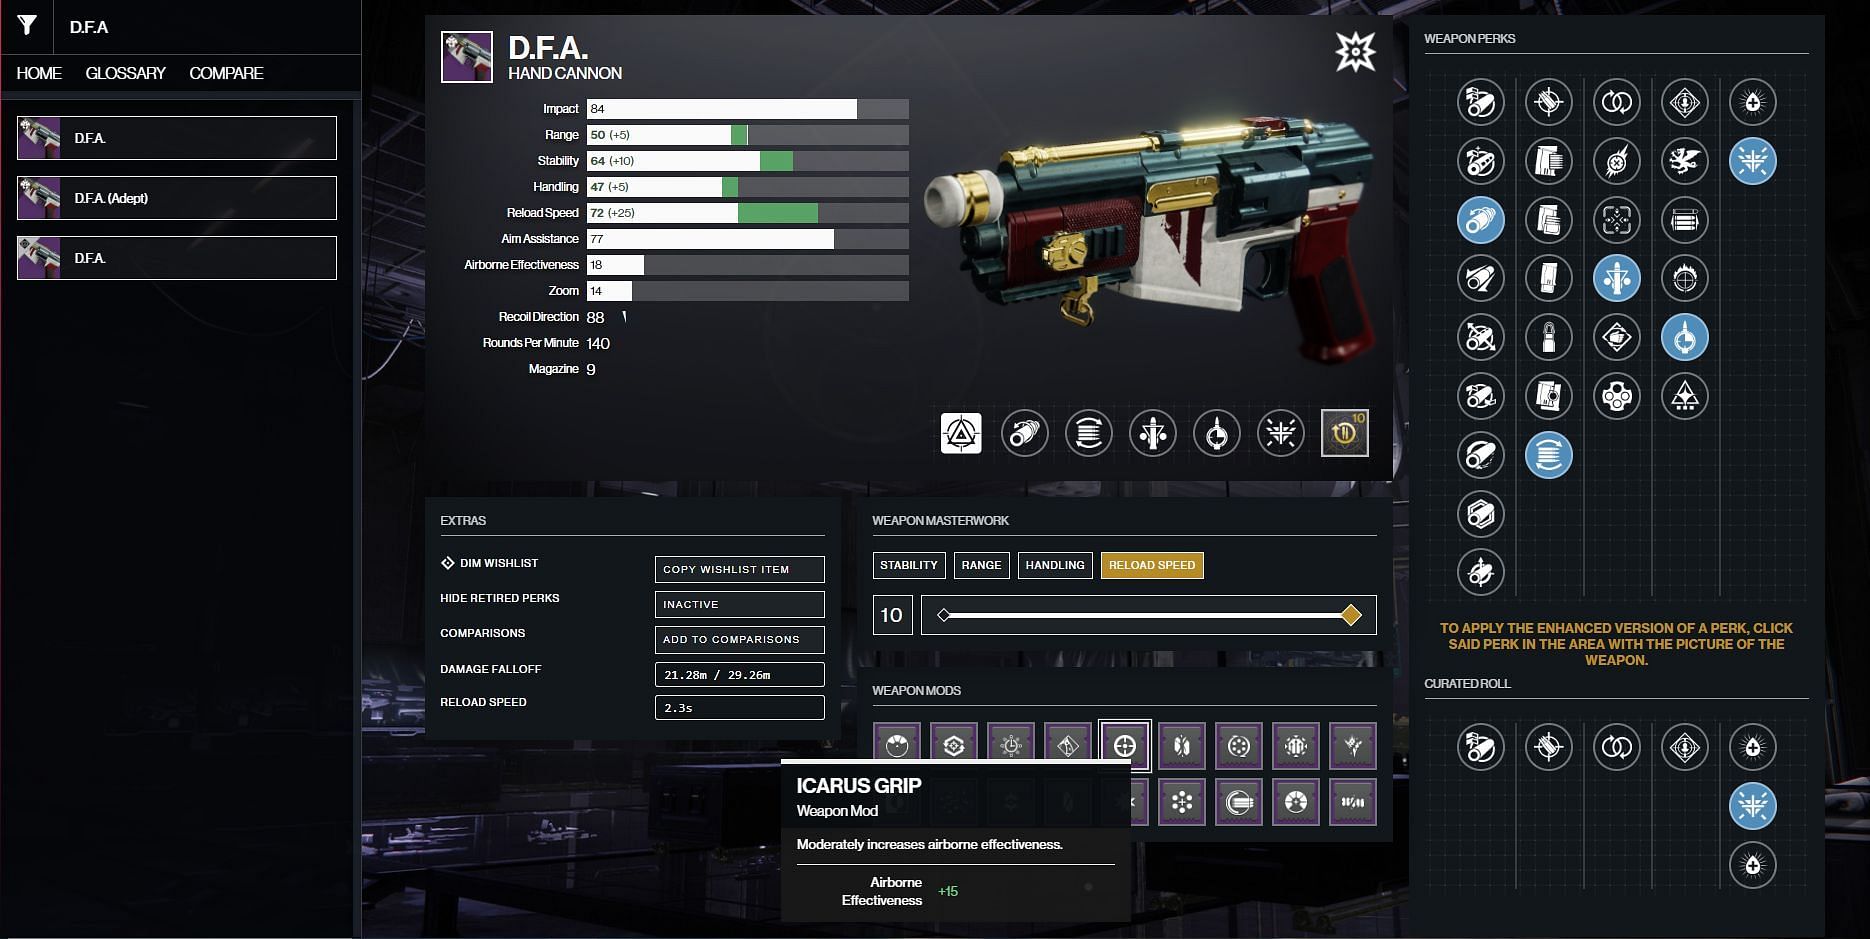 D.F.A. Hand Cannon god roll for Destiny 2 PvE (Image via d2gunsmith)